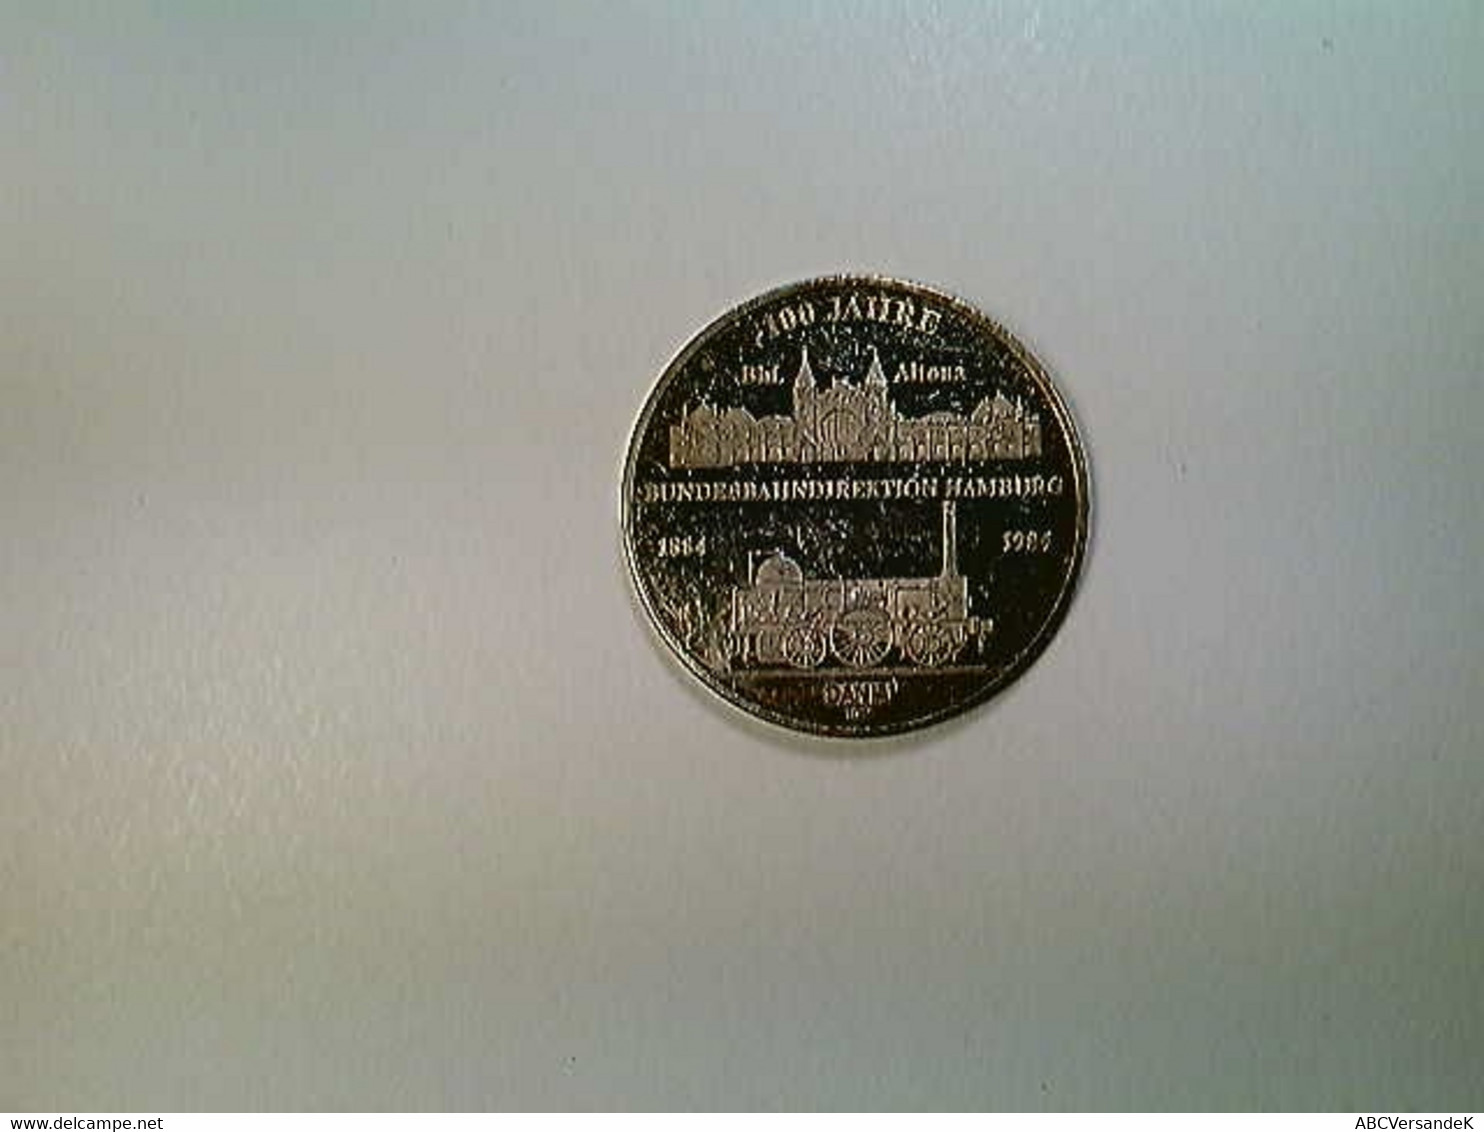 Medaille Hamburg 100 Jahre Bundesbahndirektion 1884-1984, Silber 1000 - Numismatica